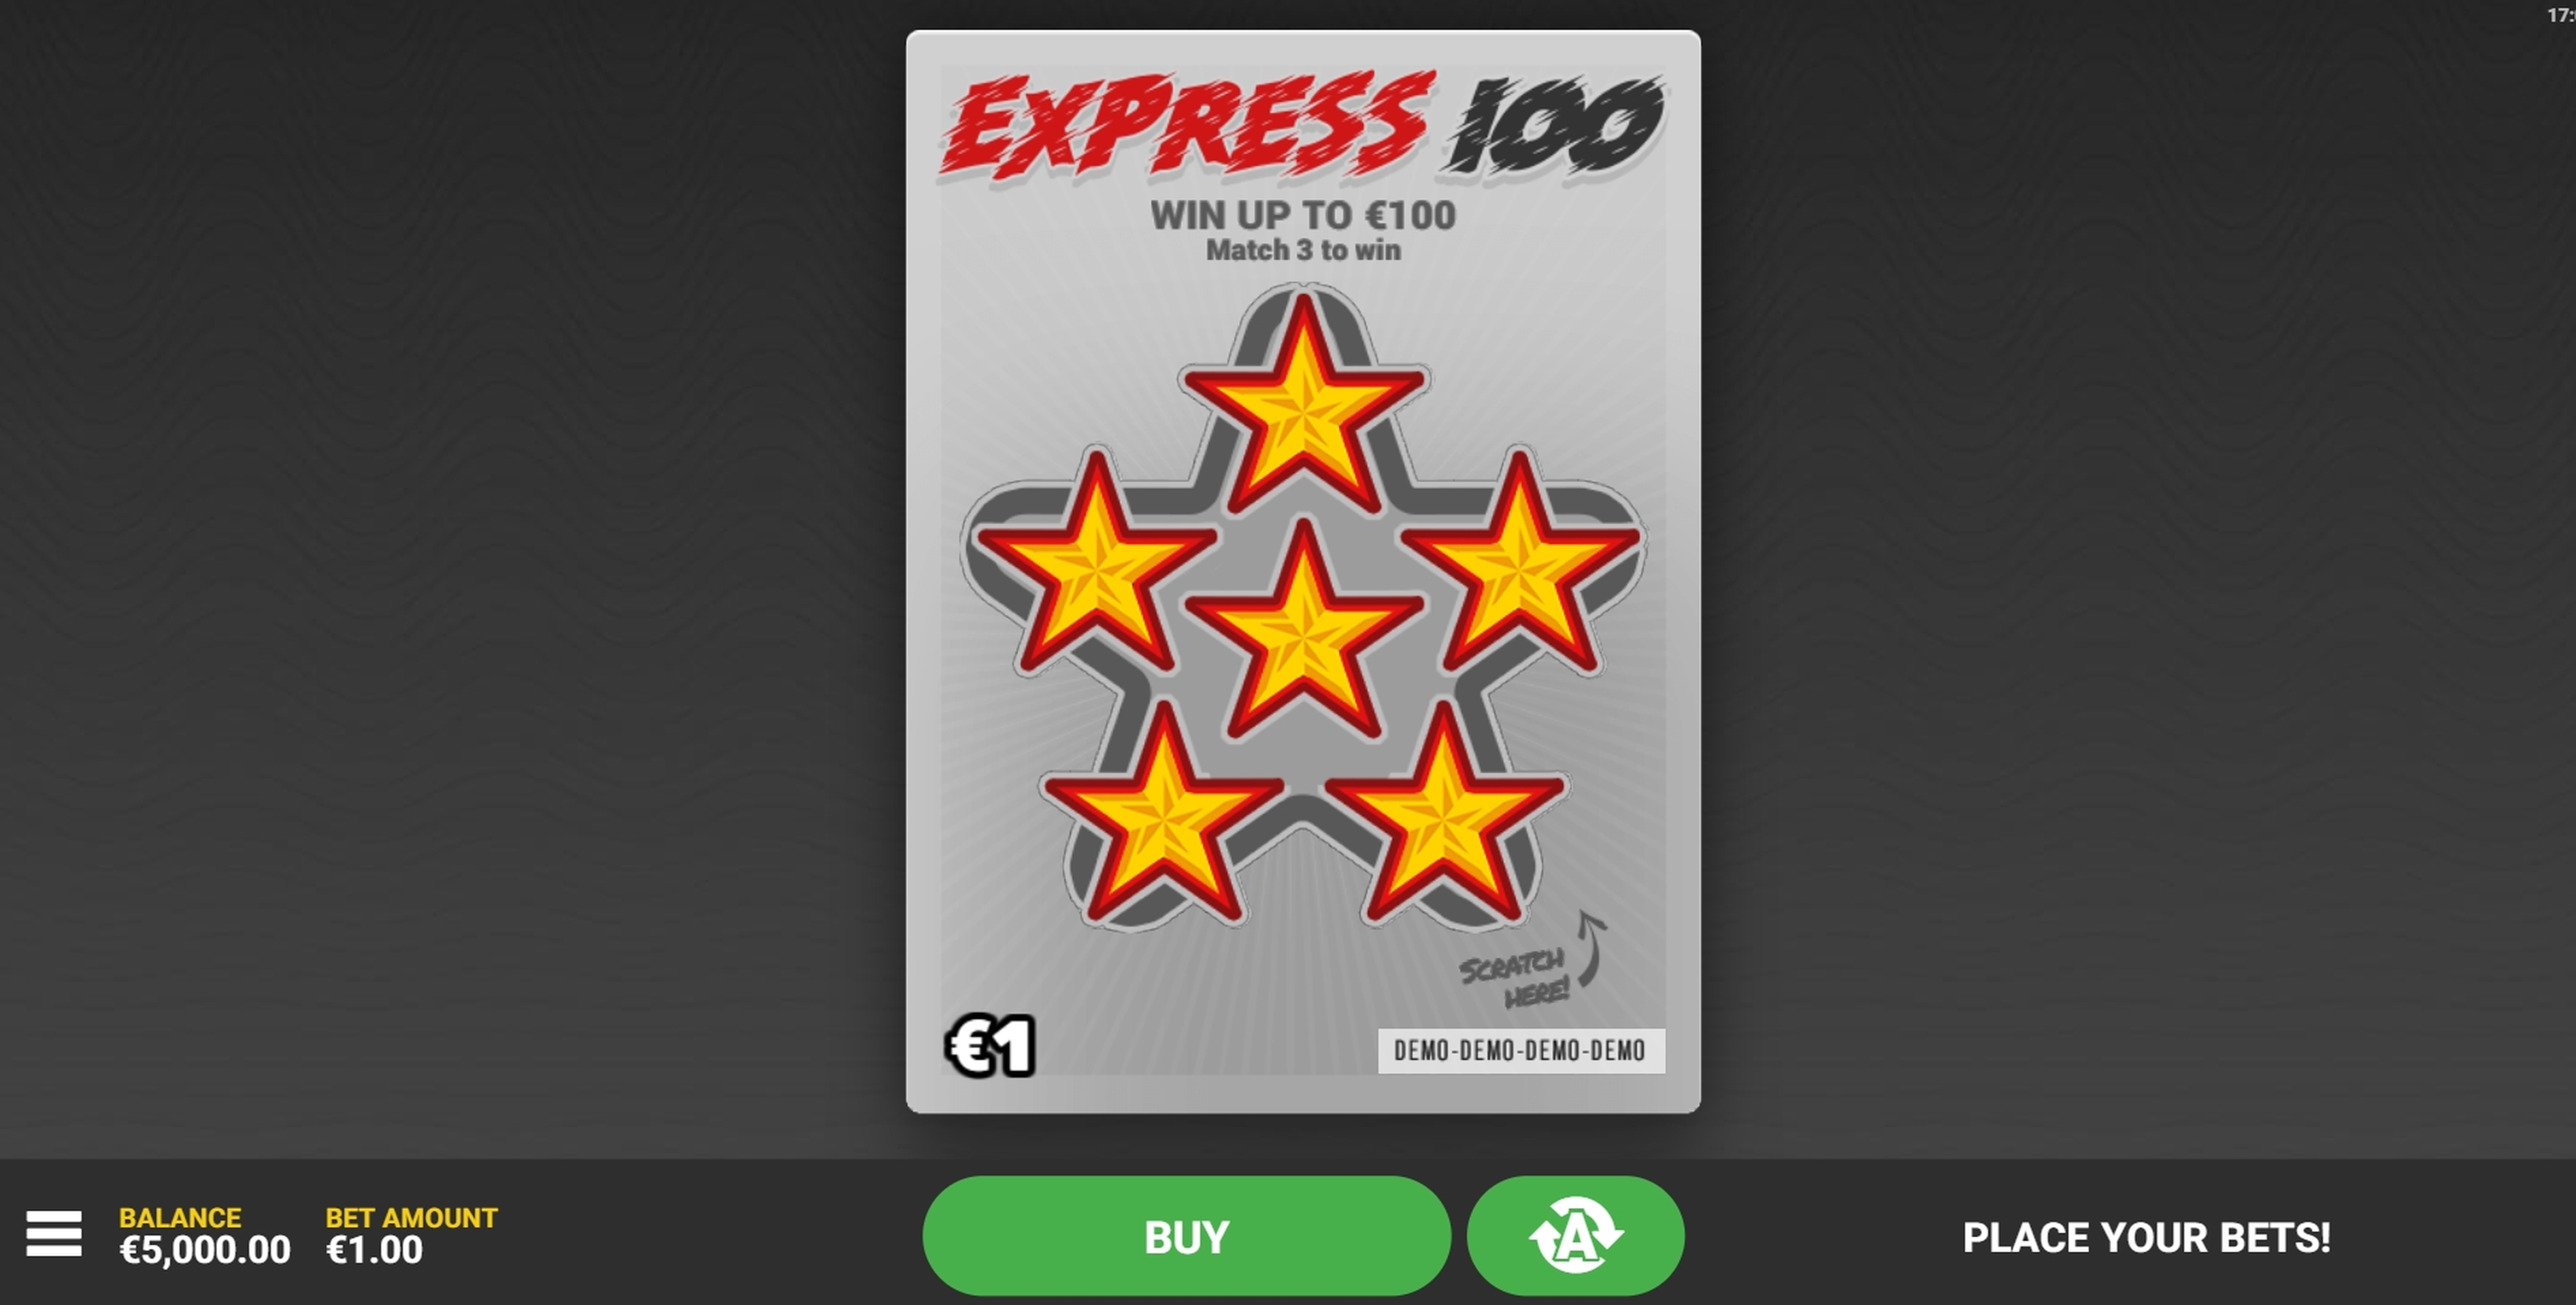 Express 100 demo